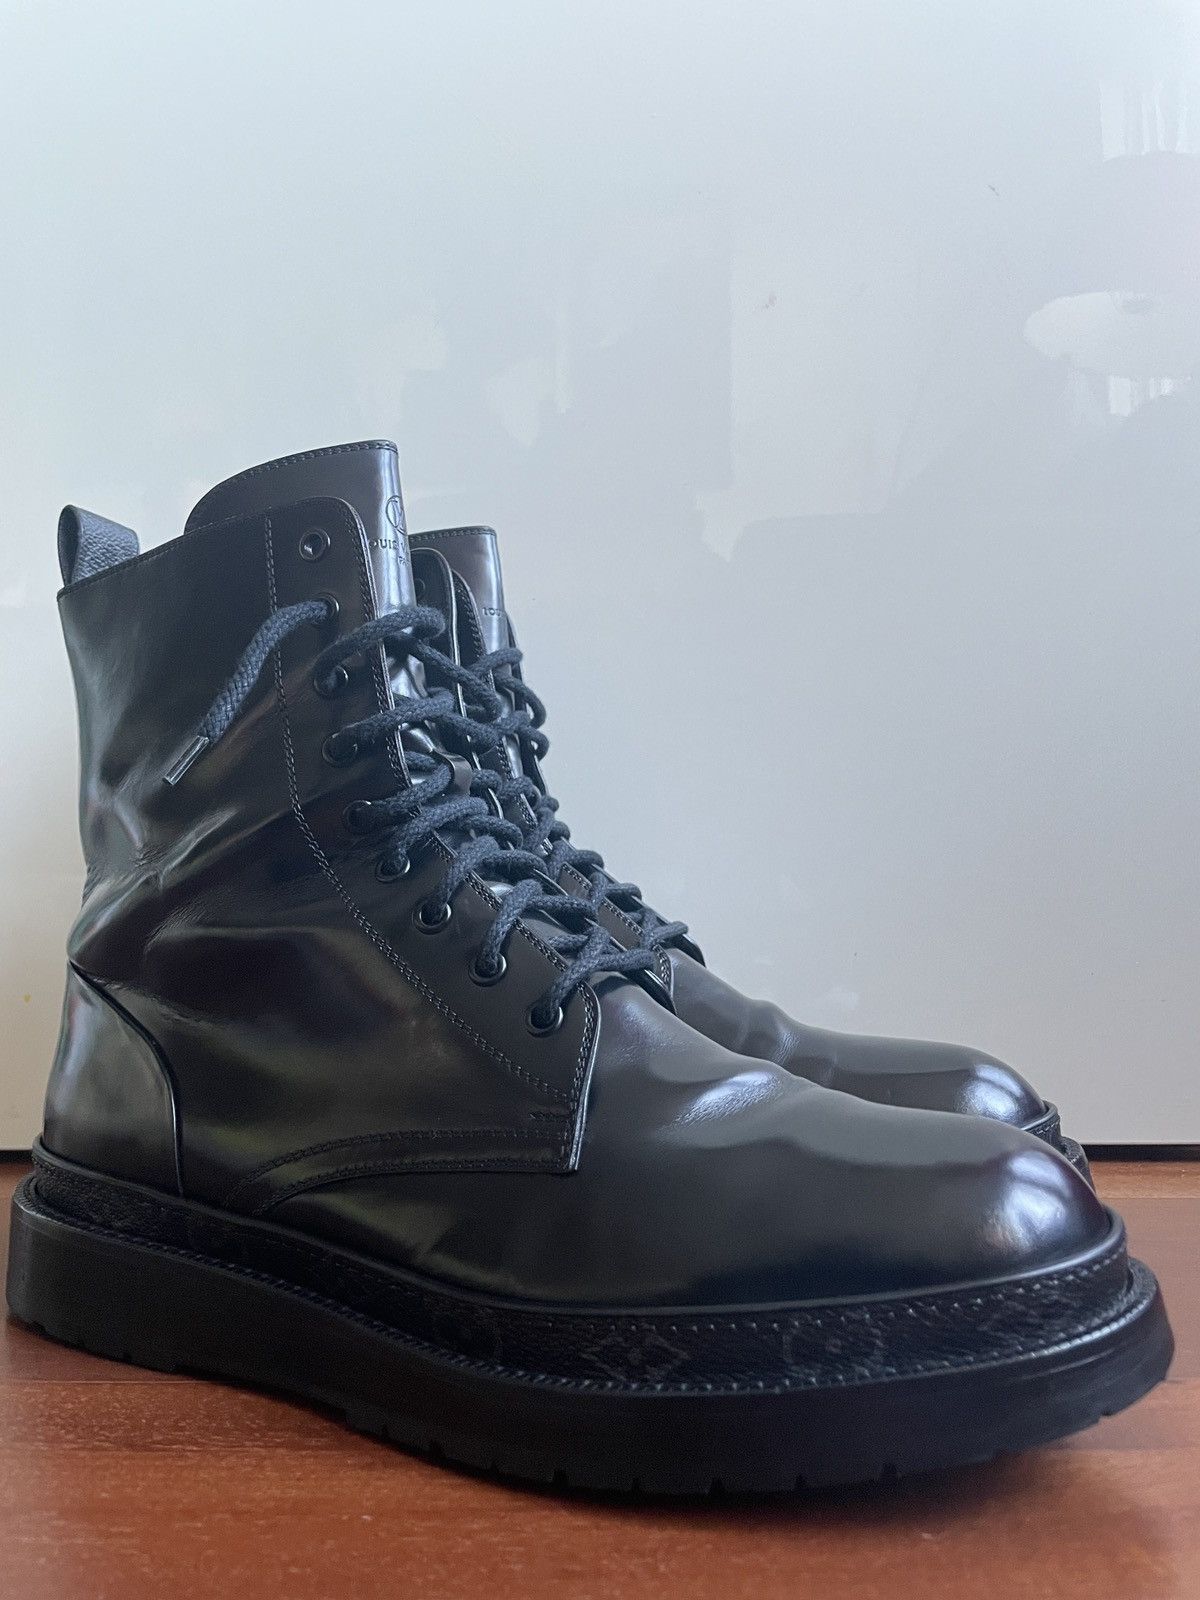 Oberkampf leather boots Louis Vuitton Black size 44 EU in Leather